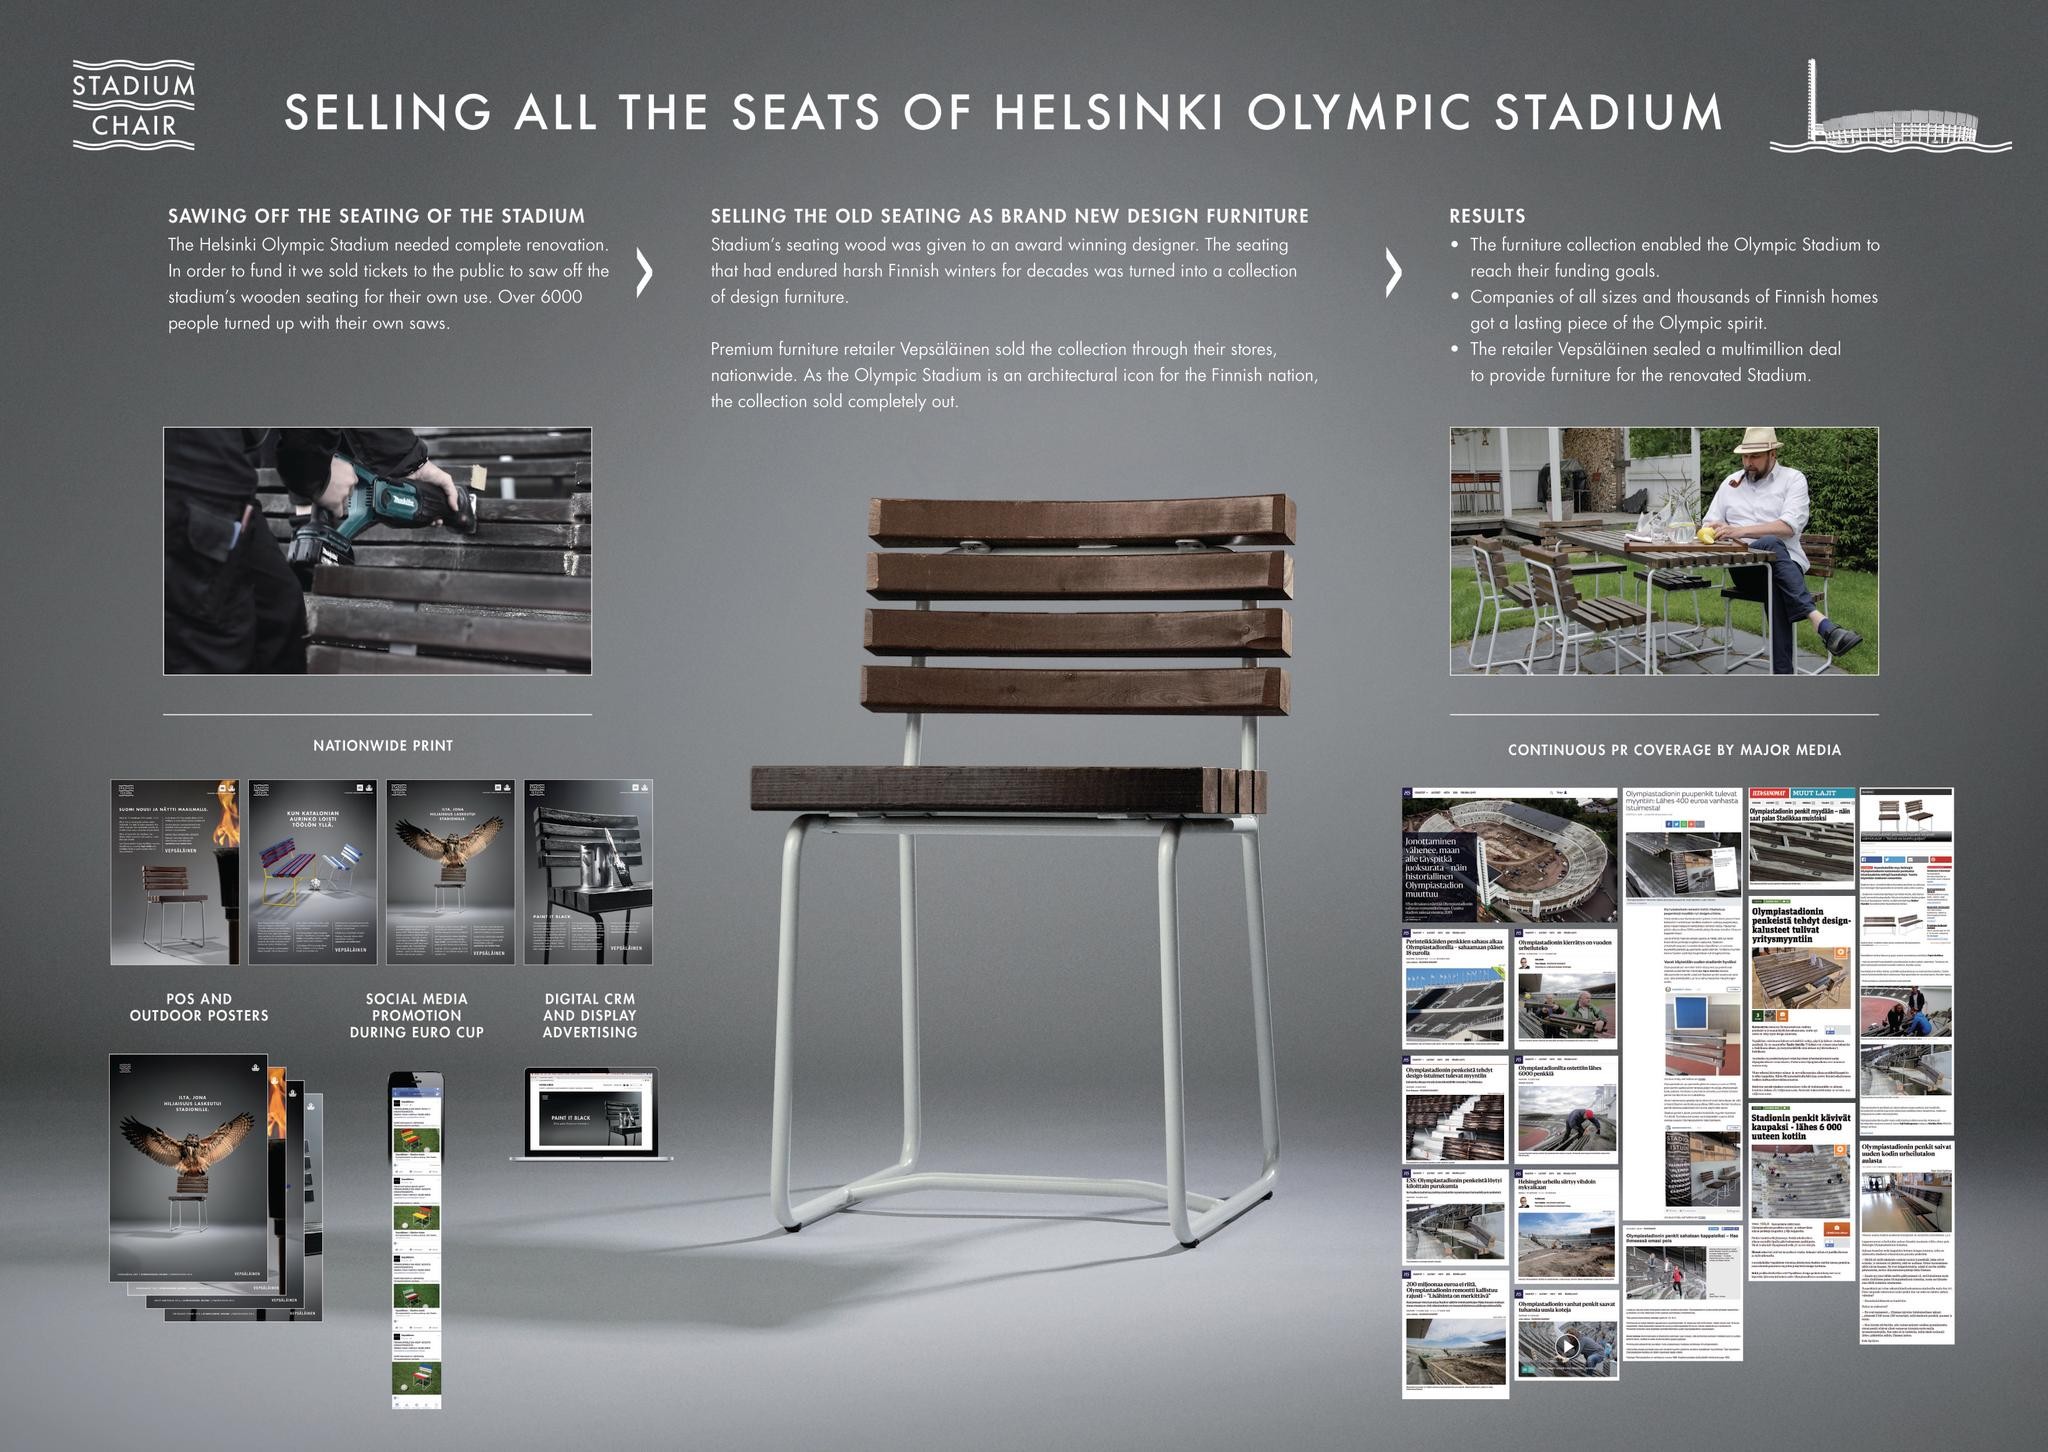 Stadium chair – Selling all the seats of Helsinki Olympic Stadium